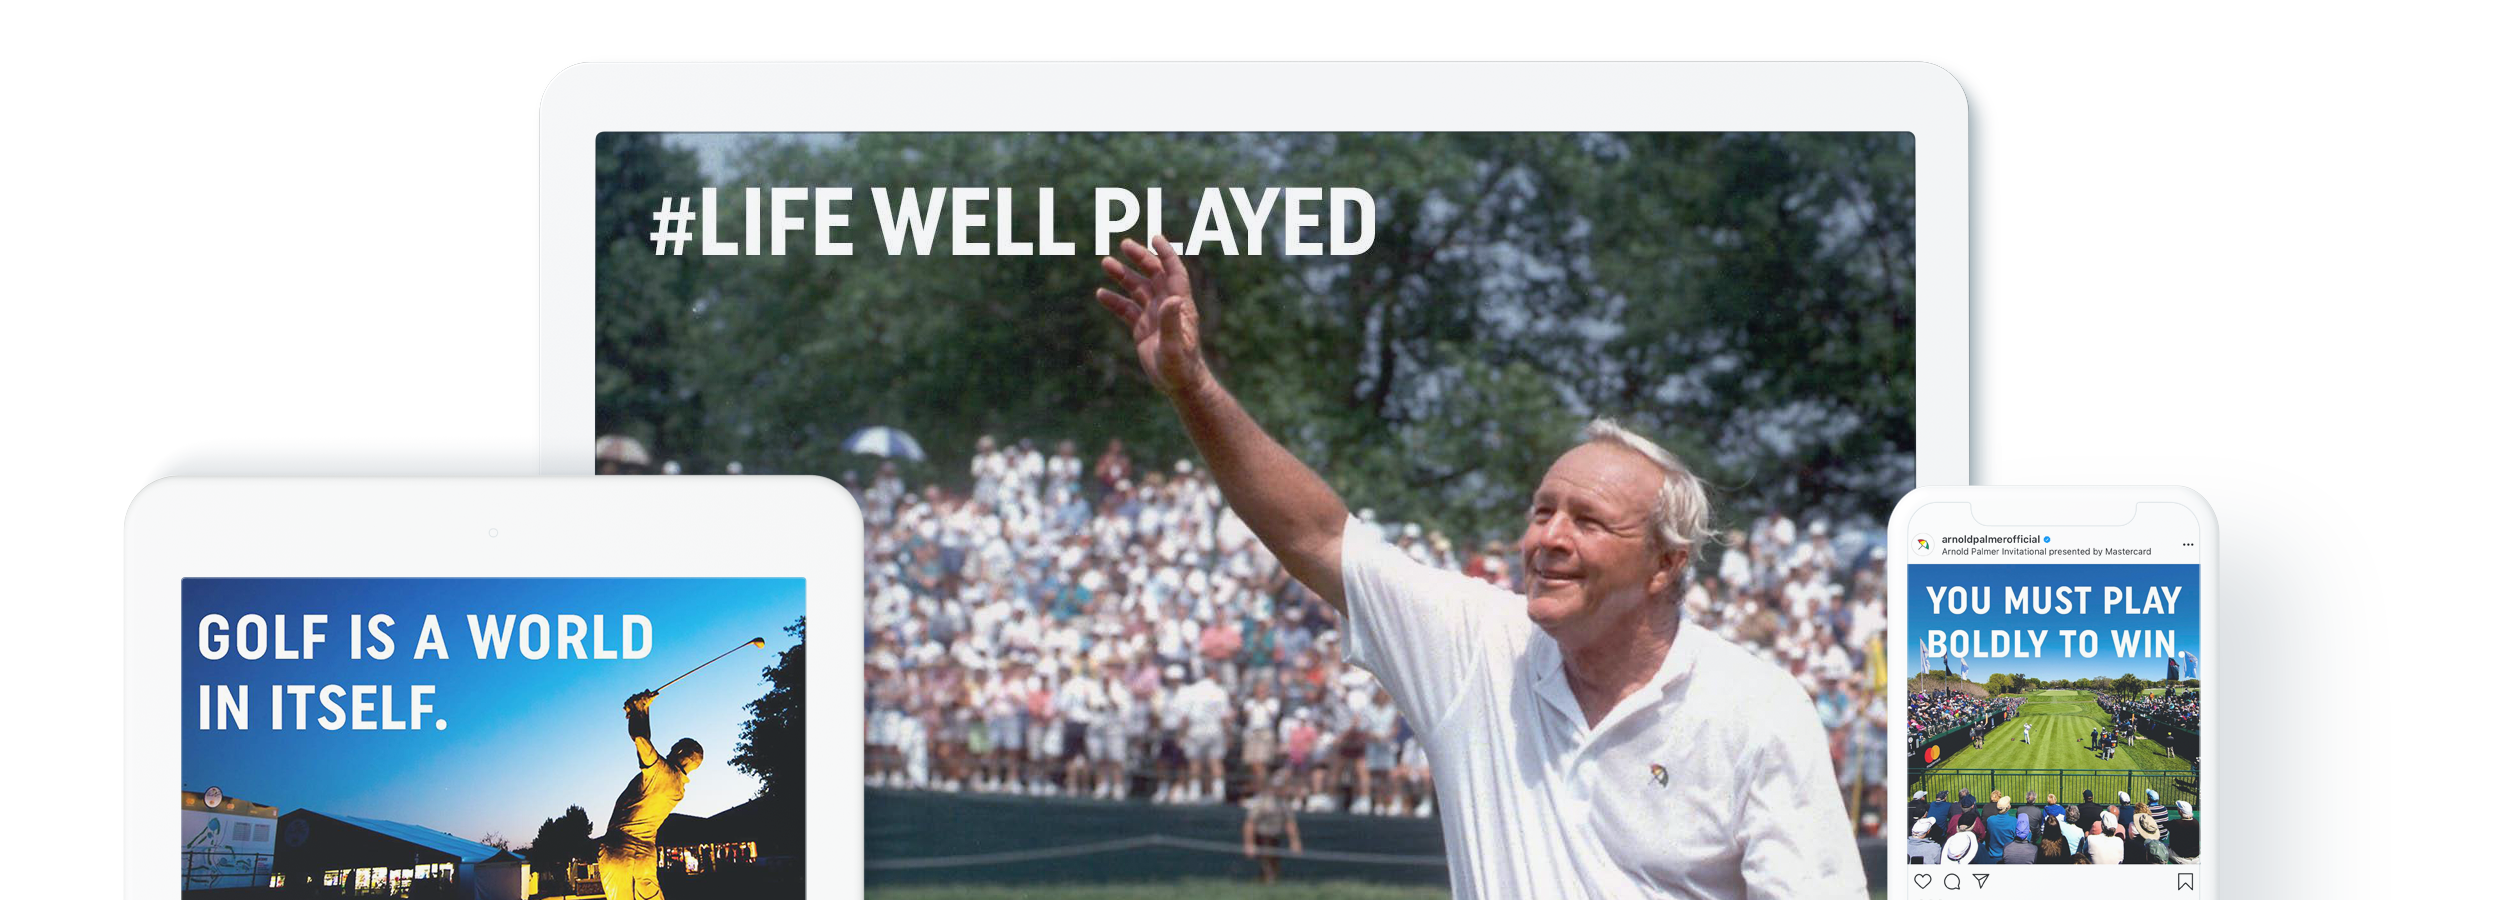 Arnold Palmer Memorial Campaign #LifeWellPlayed